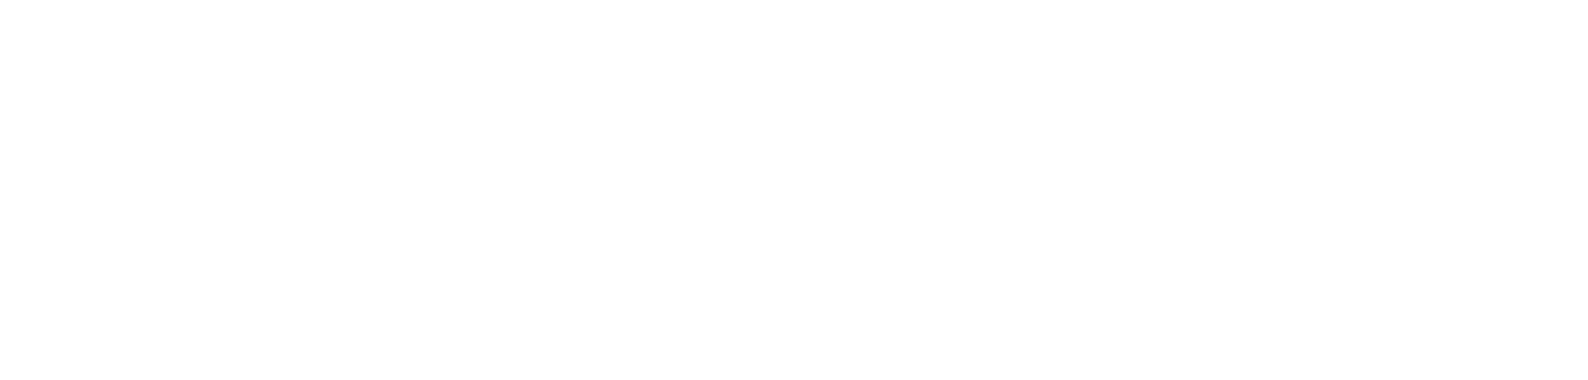 Kunlun Tech logo for dark backgrounds (transparent PNG)